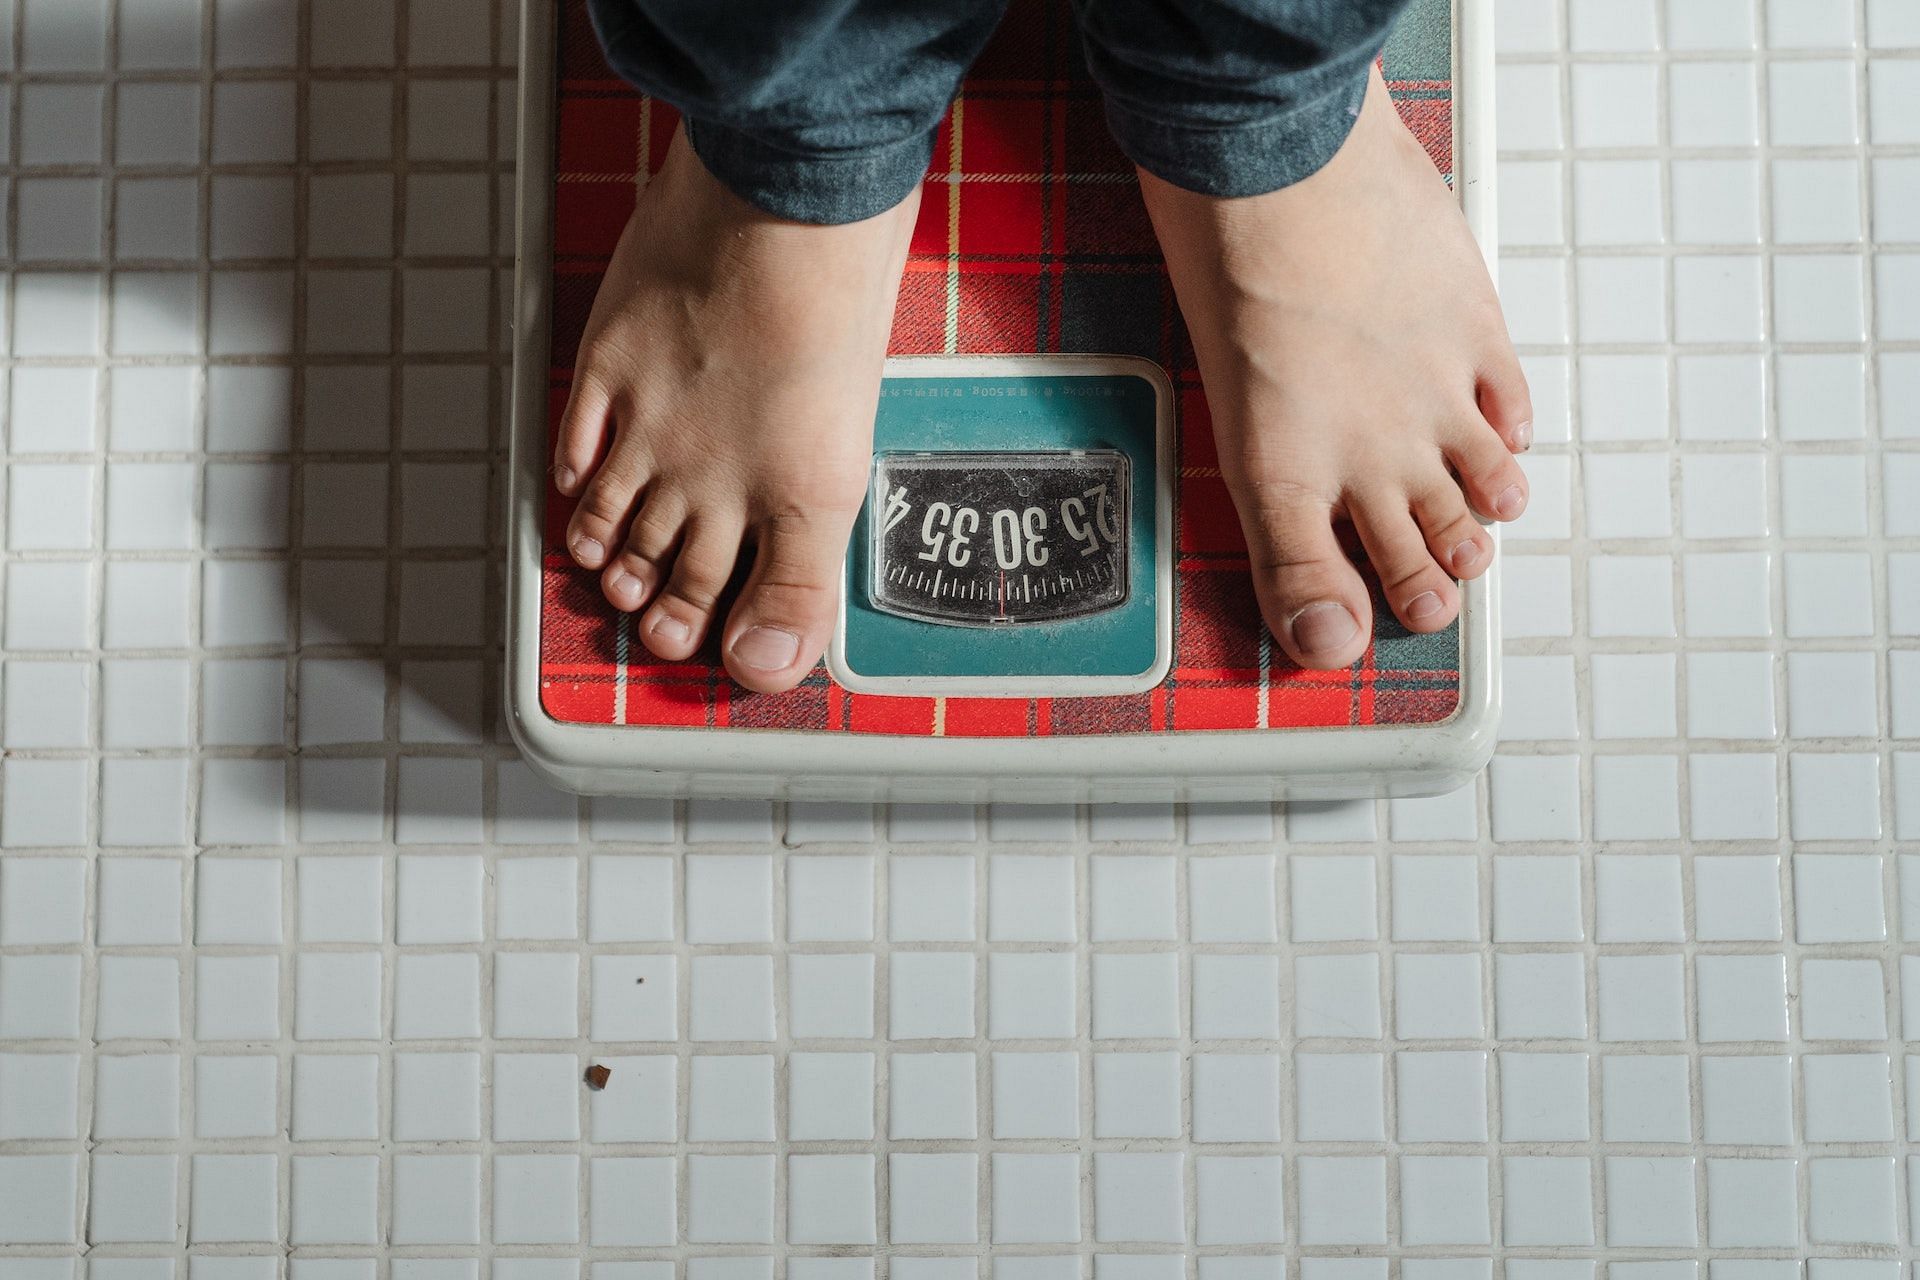 Zero carb foods may help you lose weight. (Photo via Pexels/Ketut Subiyanto)